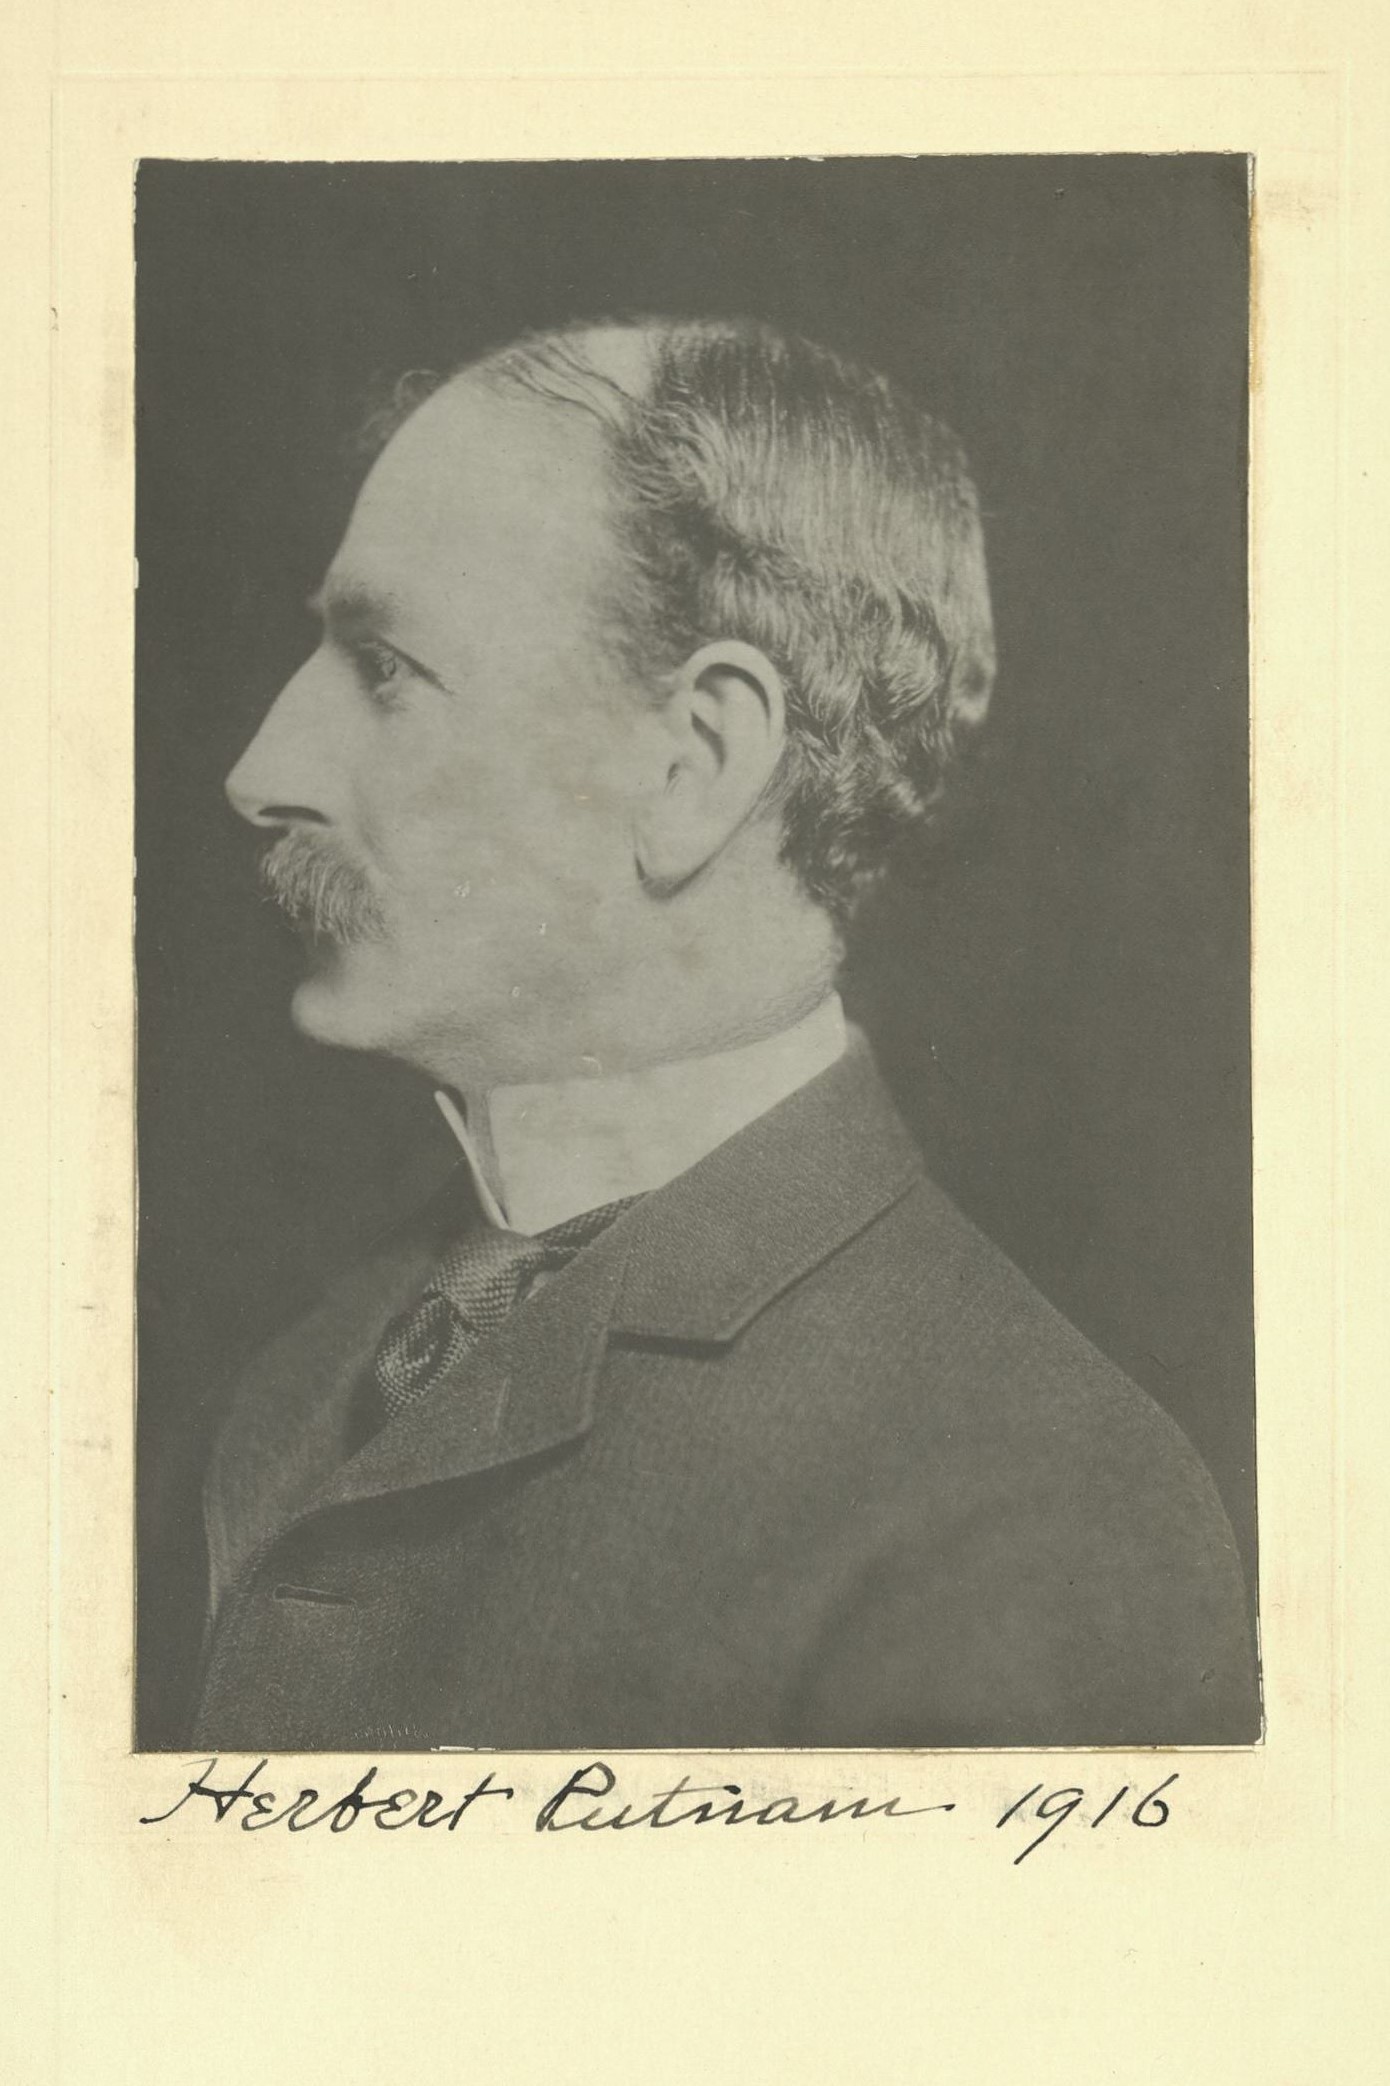 Member portrait of Herbert Putnam